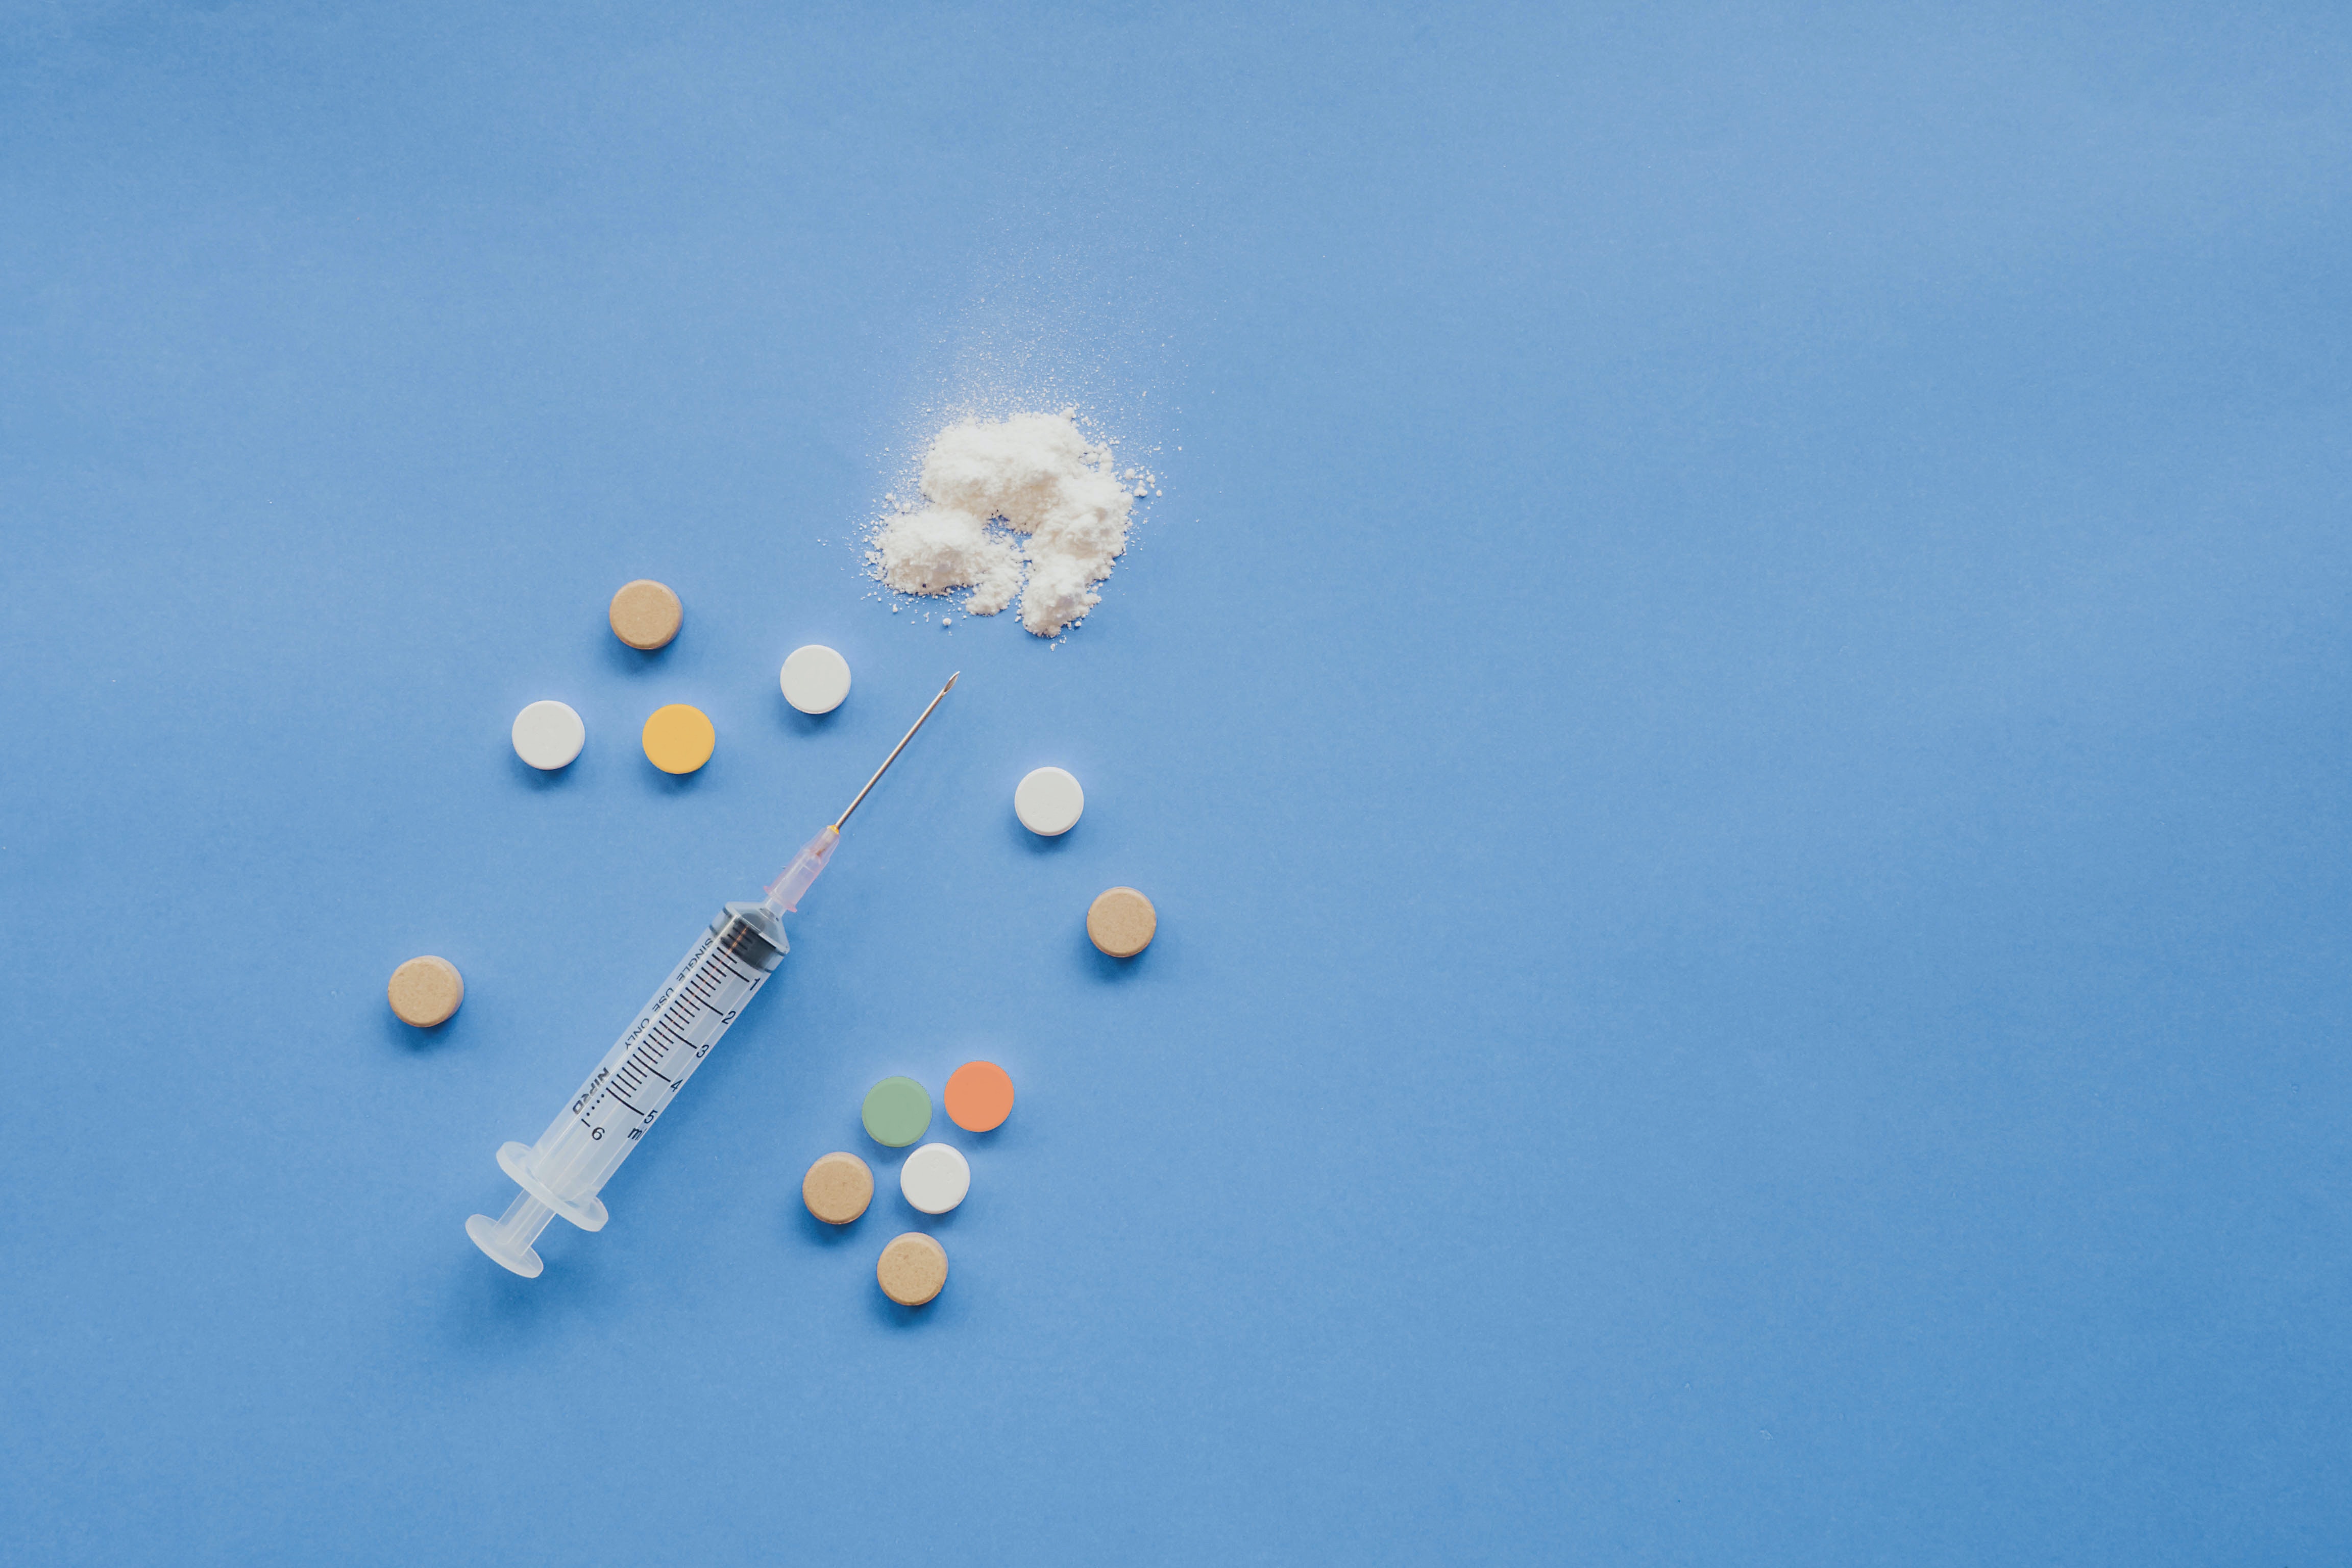 Pills, syringe, and a white powder